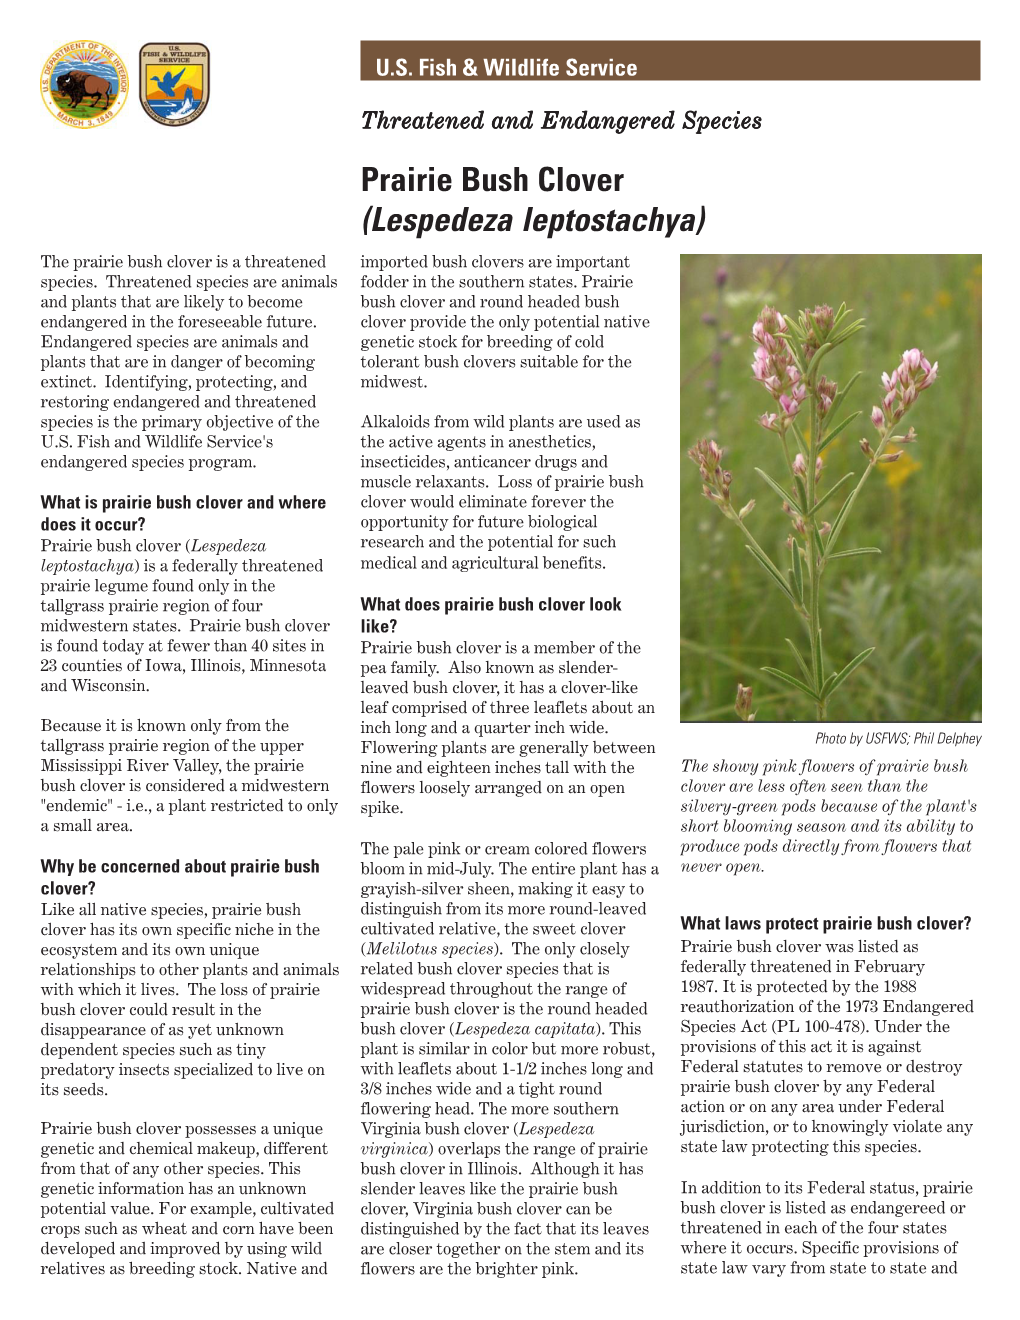 Prairie Bush Clover (Lespedeza Leptostachya) the Prairie Bush Clover Is a Threatened Imported Bush Clovers Are Important Species